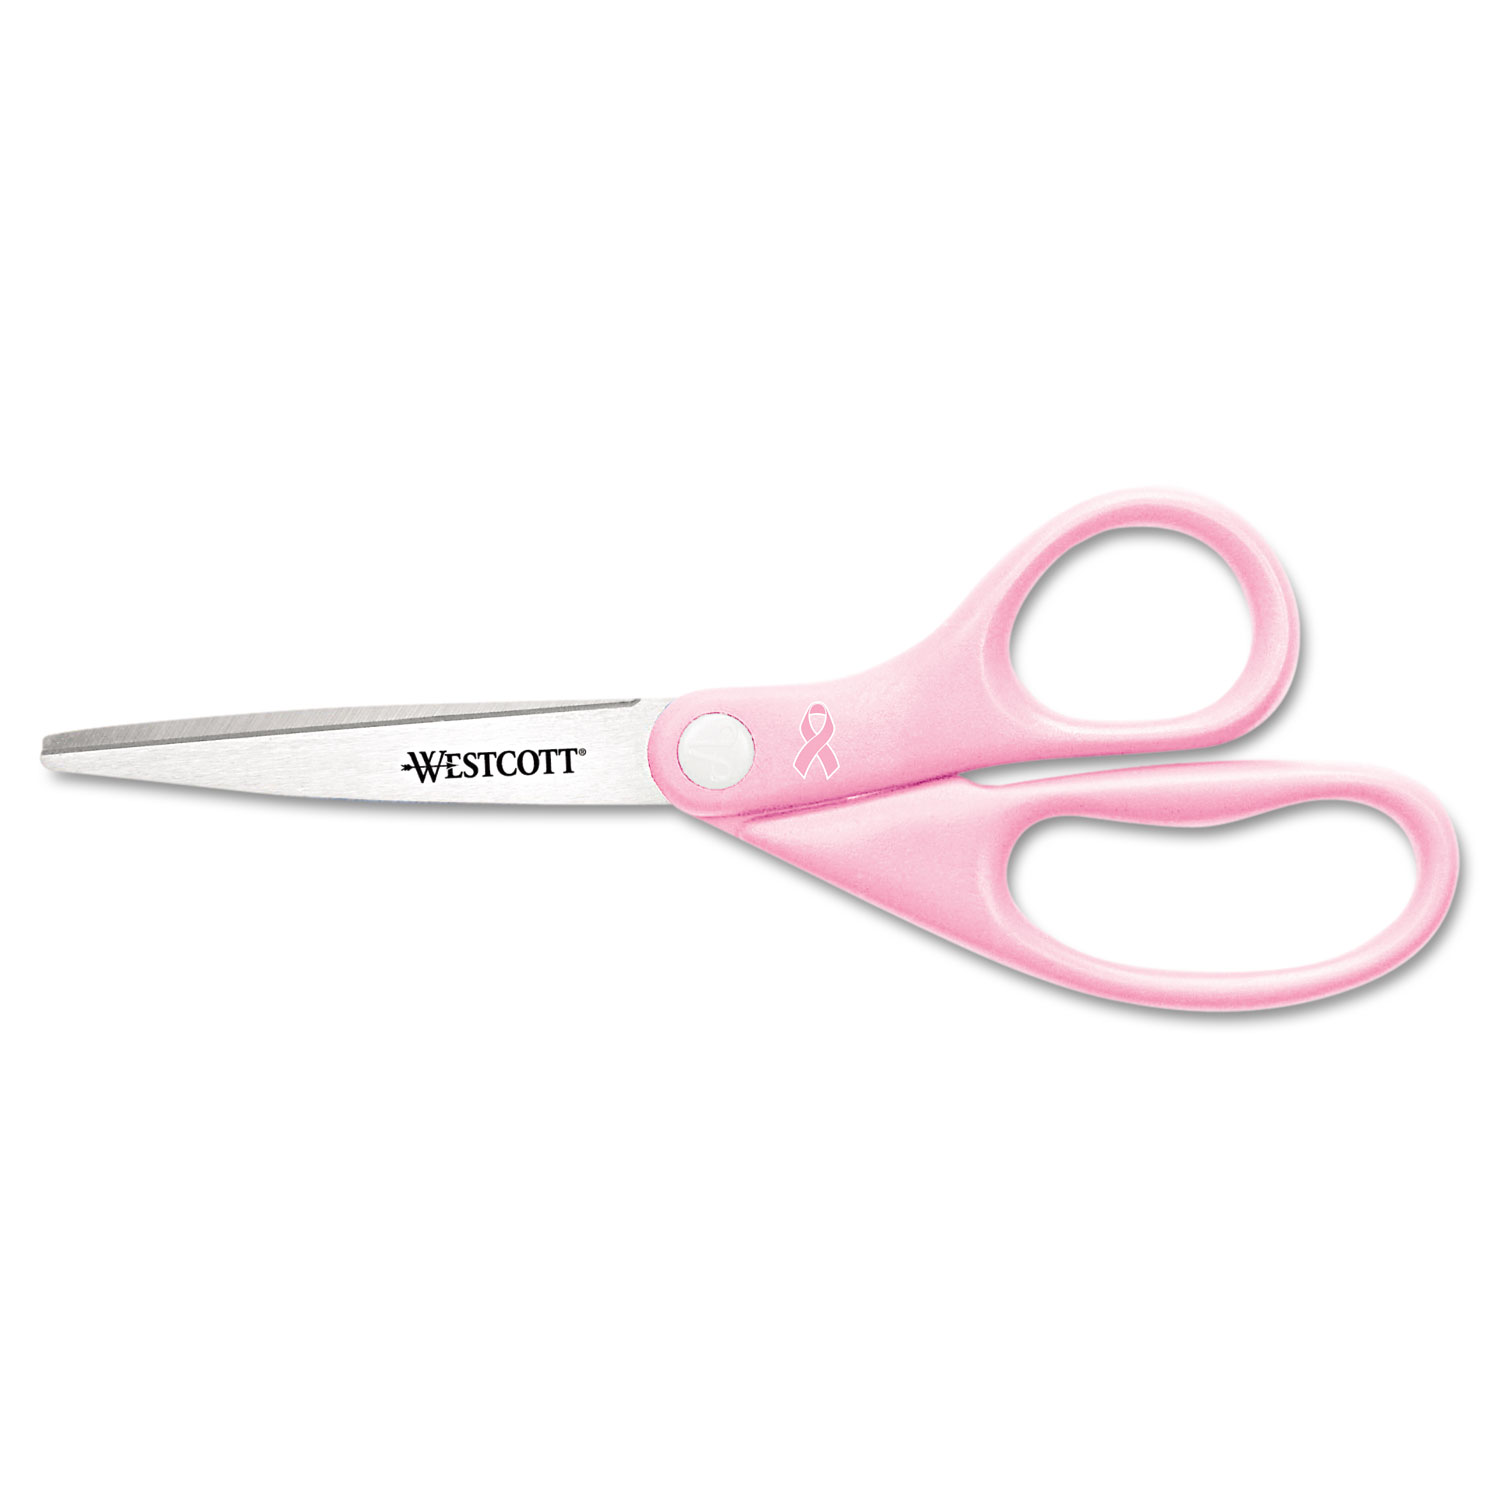 BX-1) Bycin Crafting Scissors - Pink w/ Yellow handles